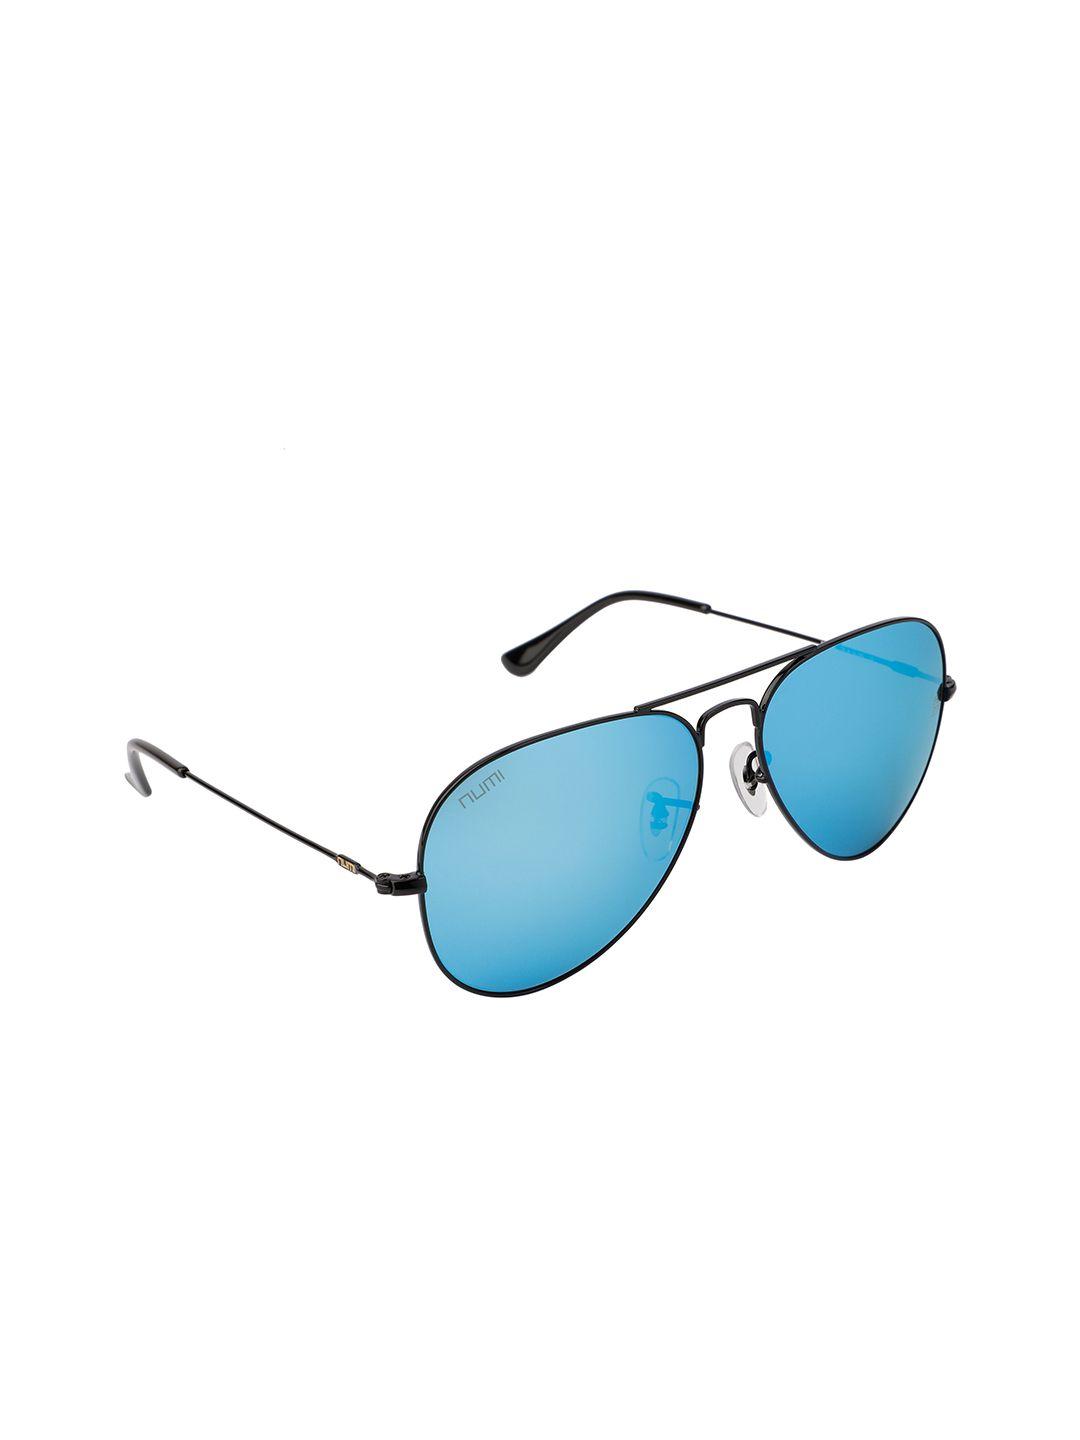 numi unisex blue lens & black full rim aviator sunglasses maverick